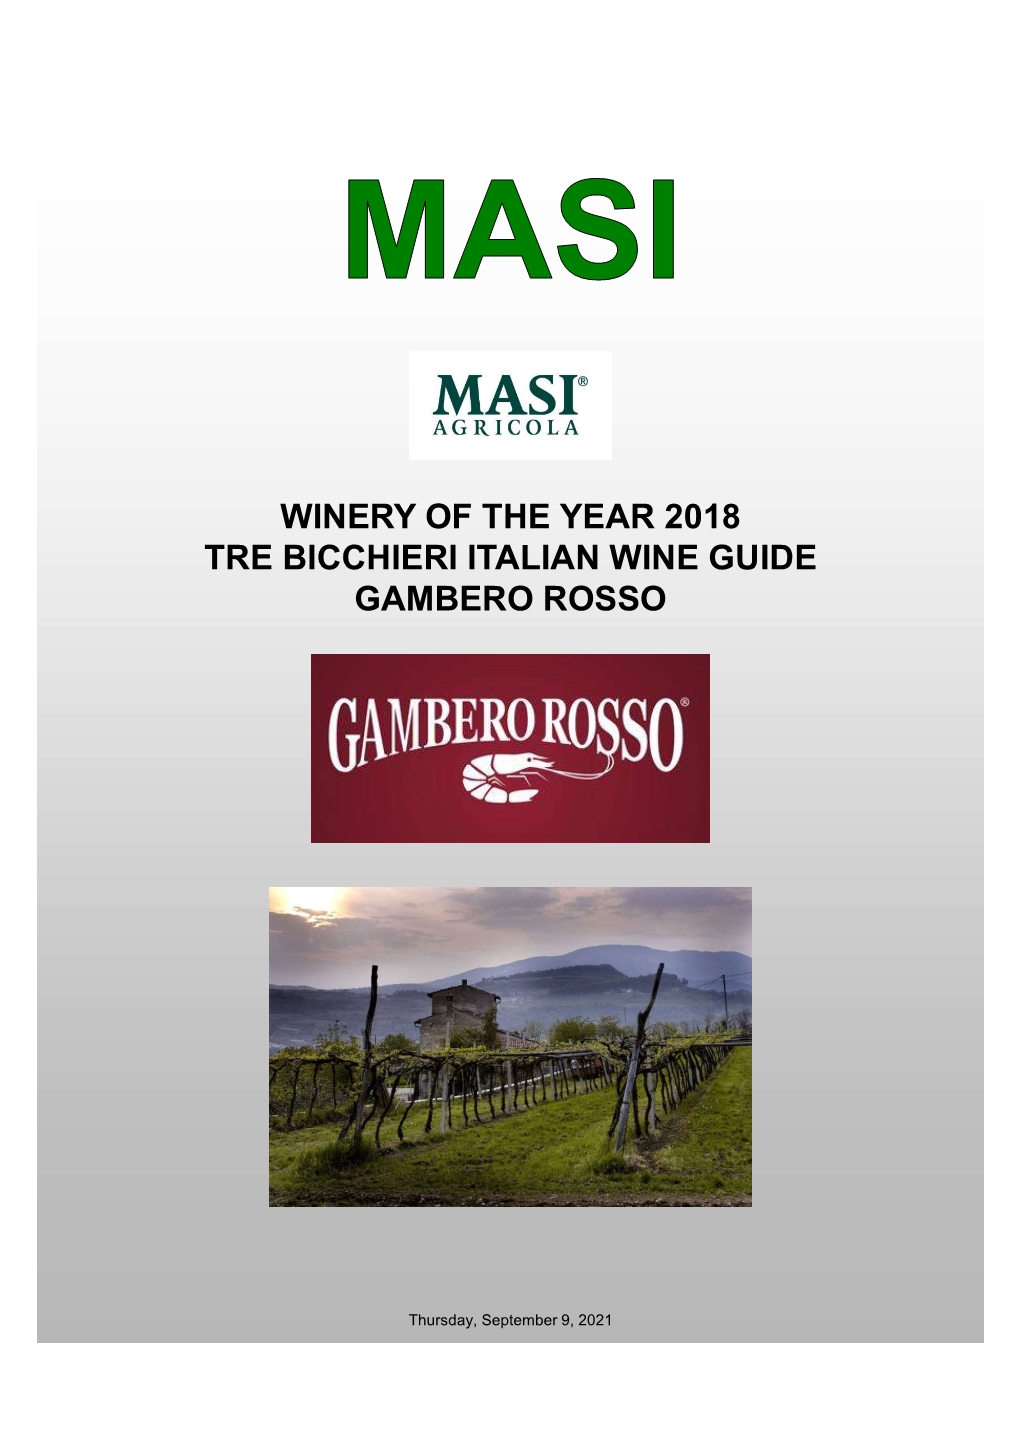 Winery of the Year 2018 Tre Bicchieri Italian Wine Guide Gambero Rosso